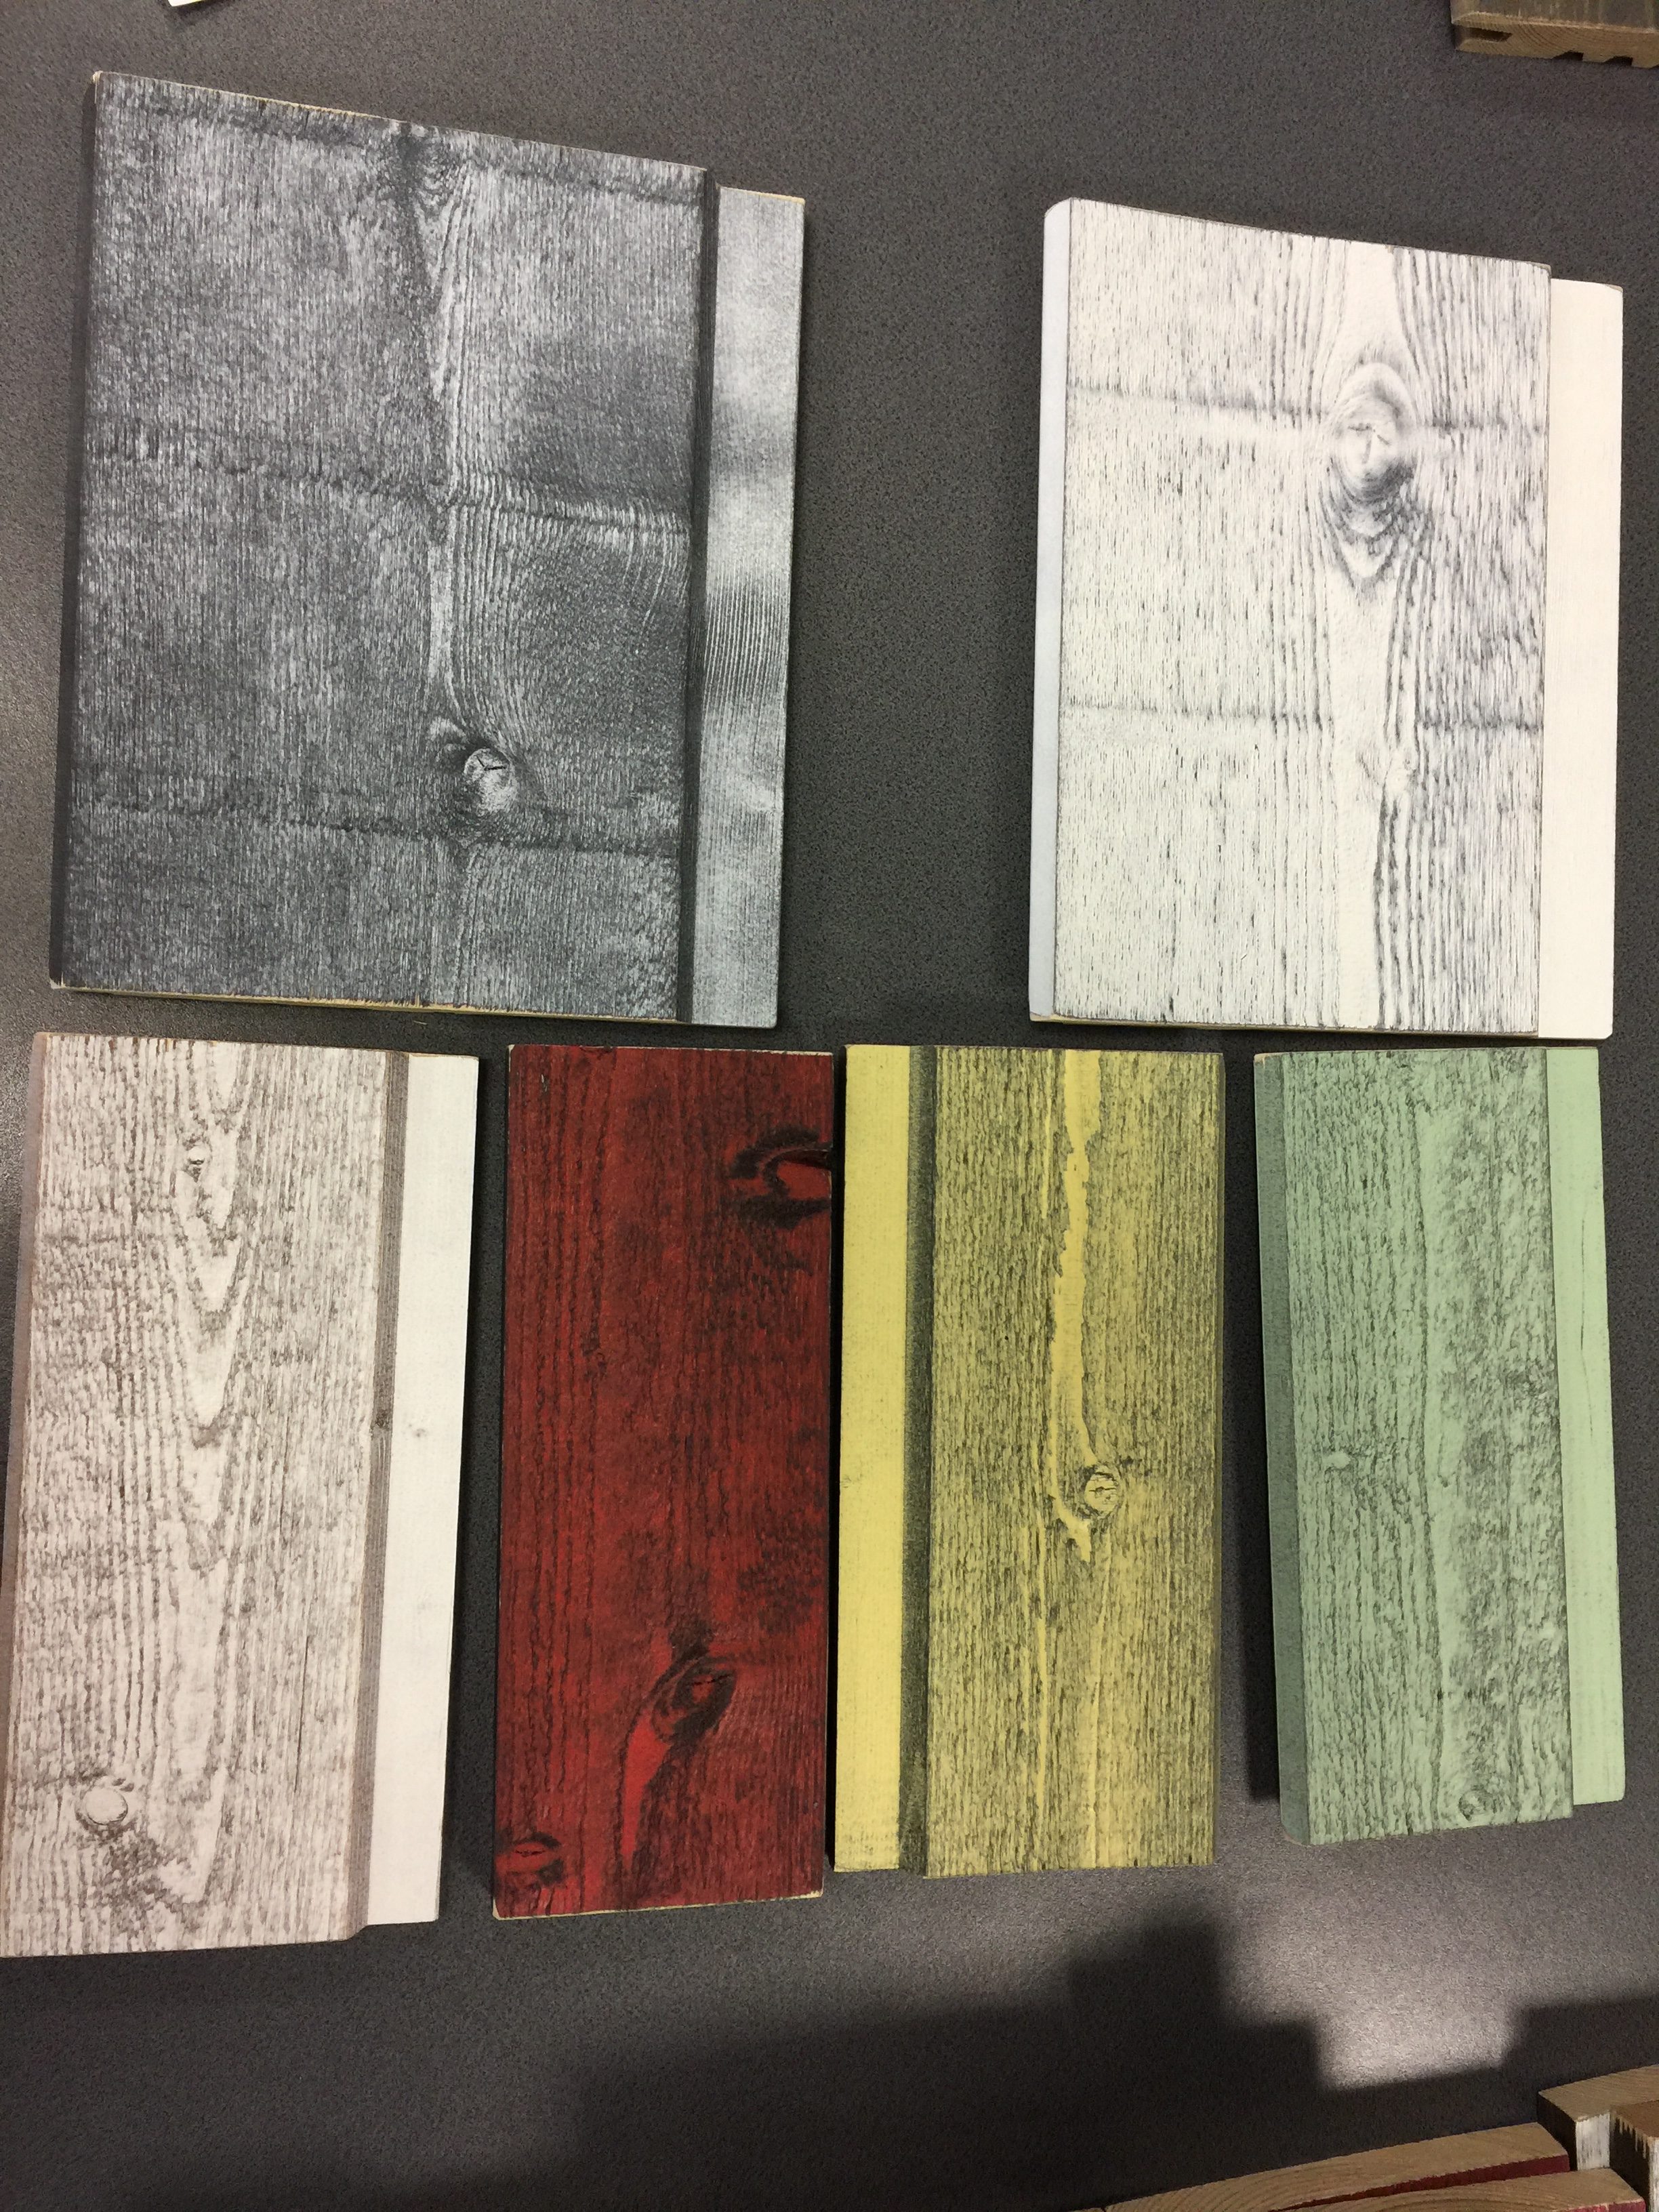 Wood surface machining finishes (sawn,planed,textured,brushed) Andrew Goto